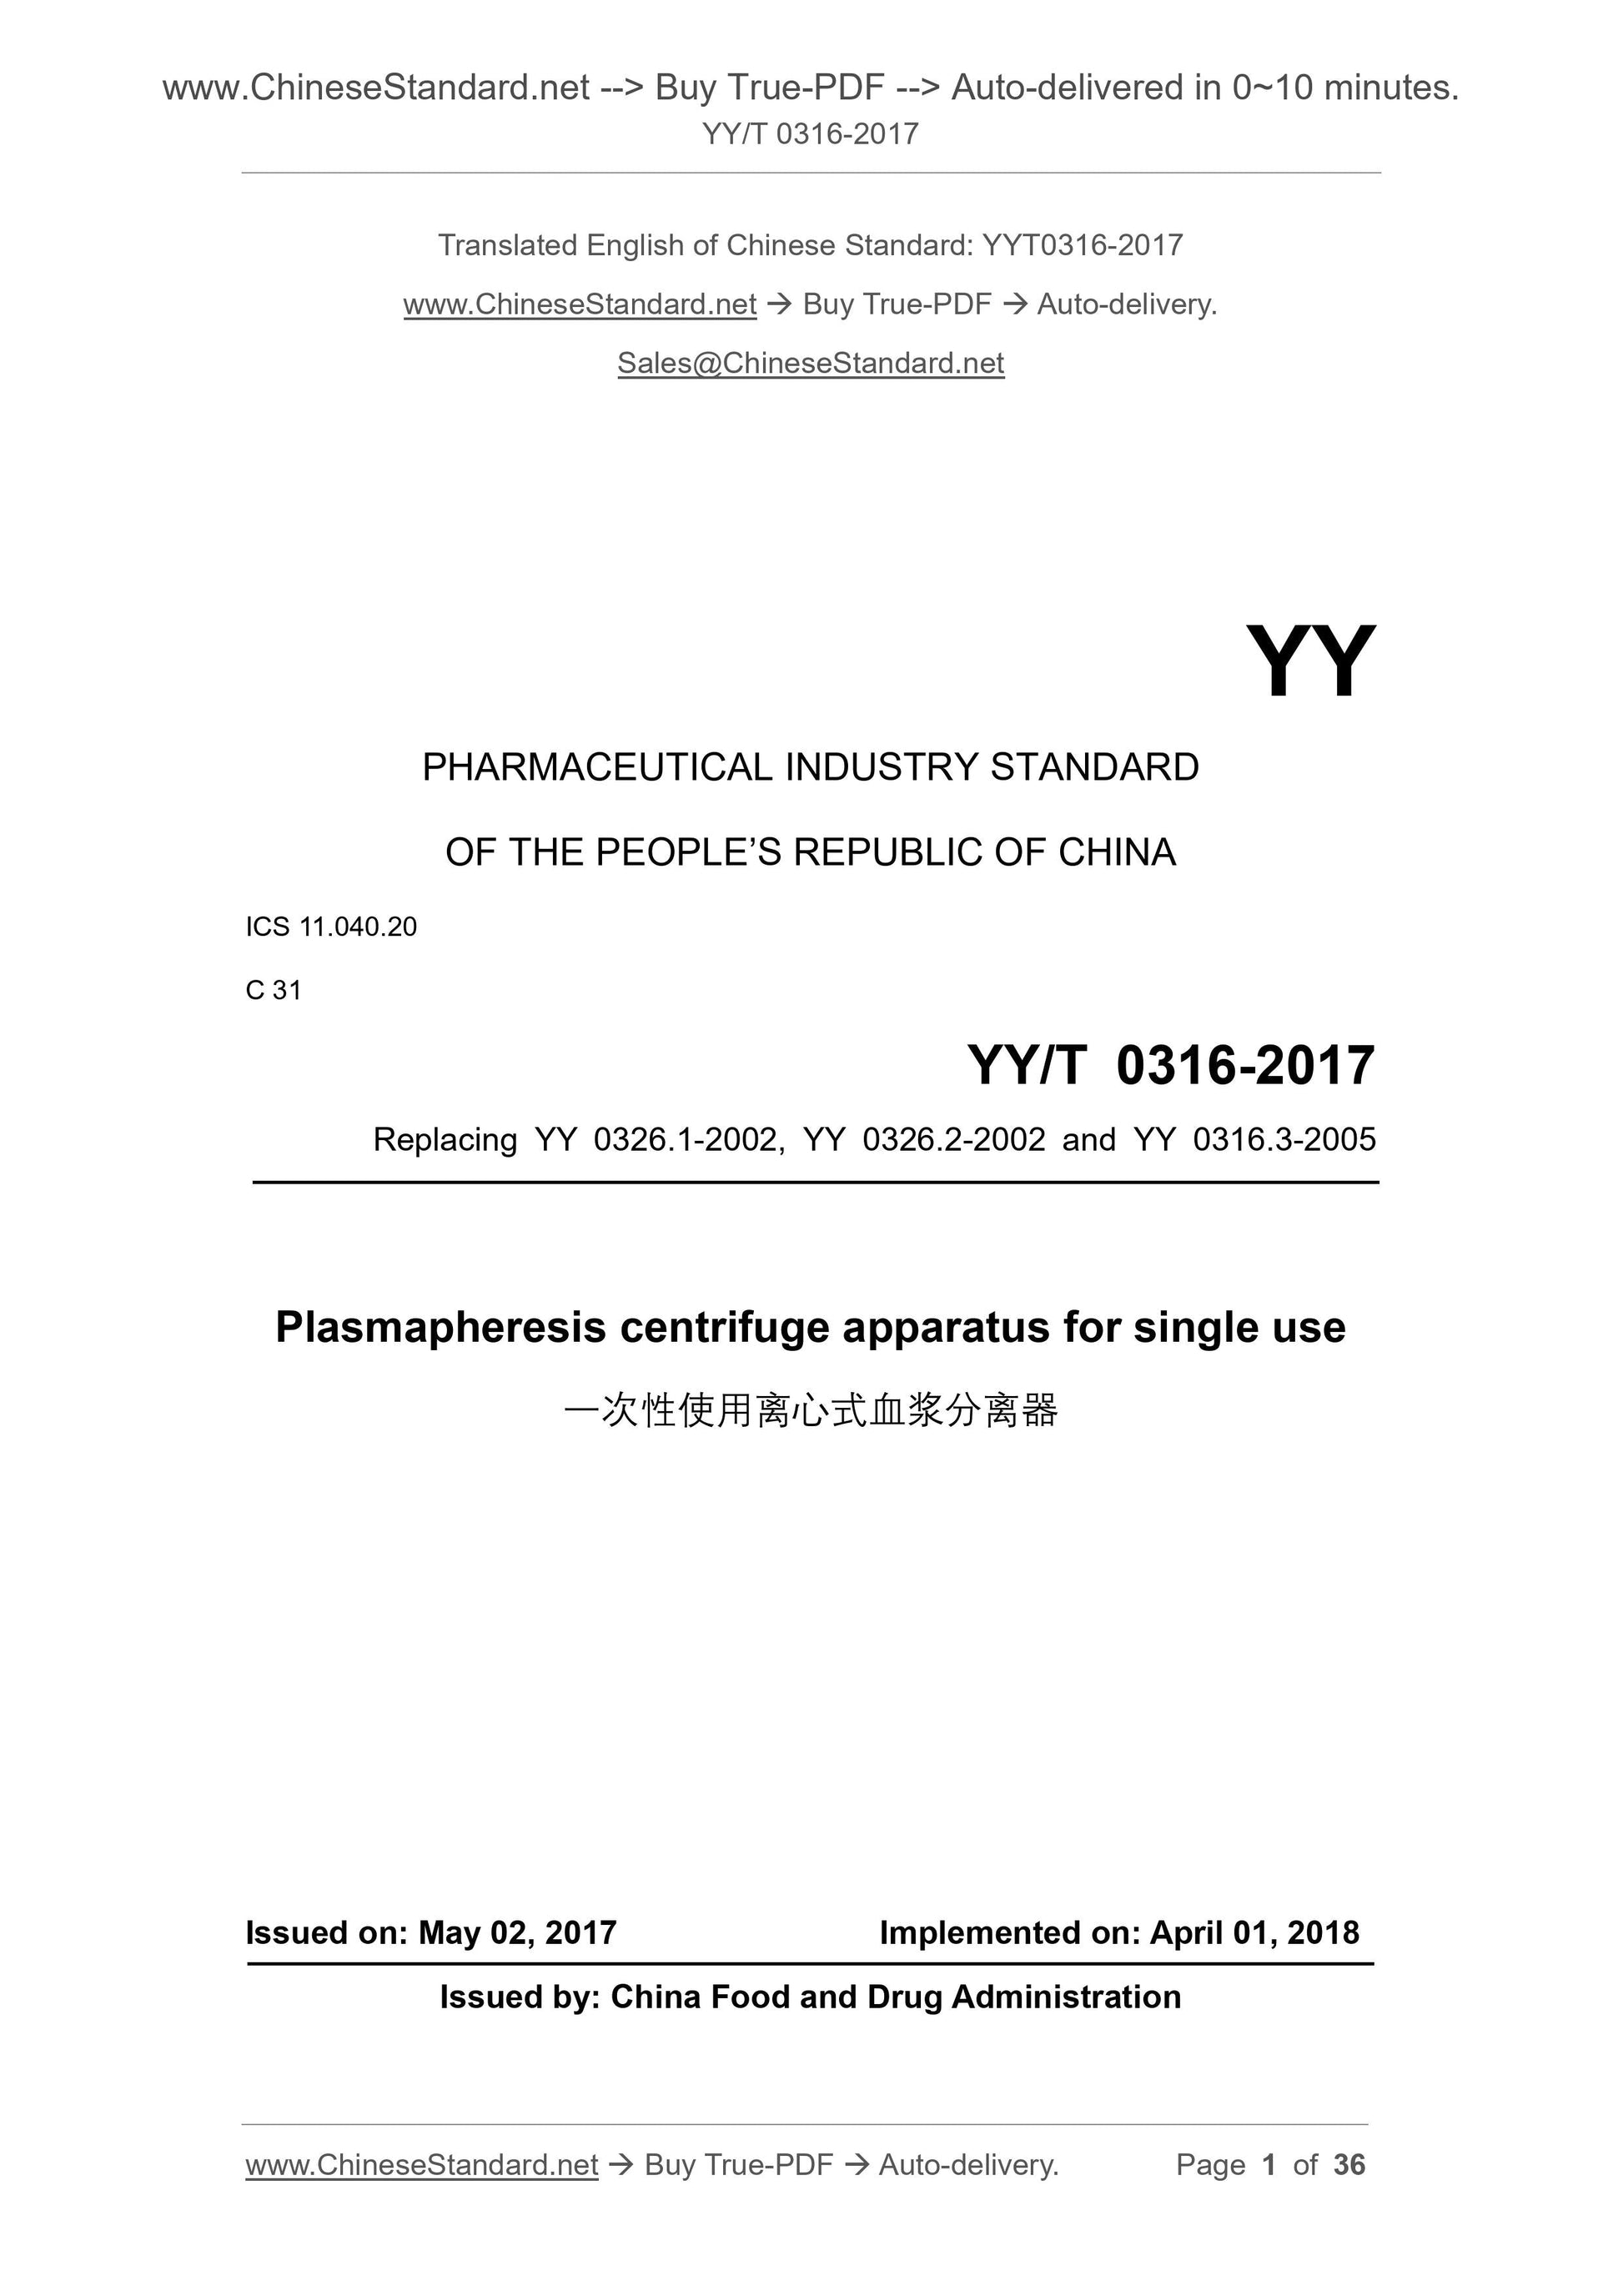 YY/T 0326-2017 Page 1